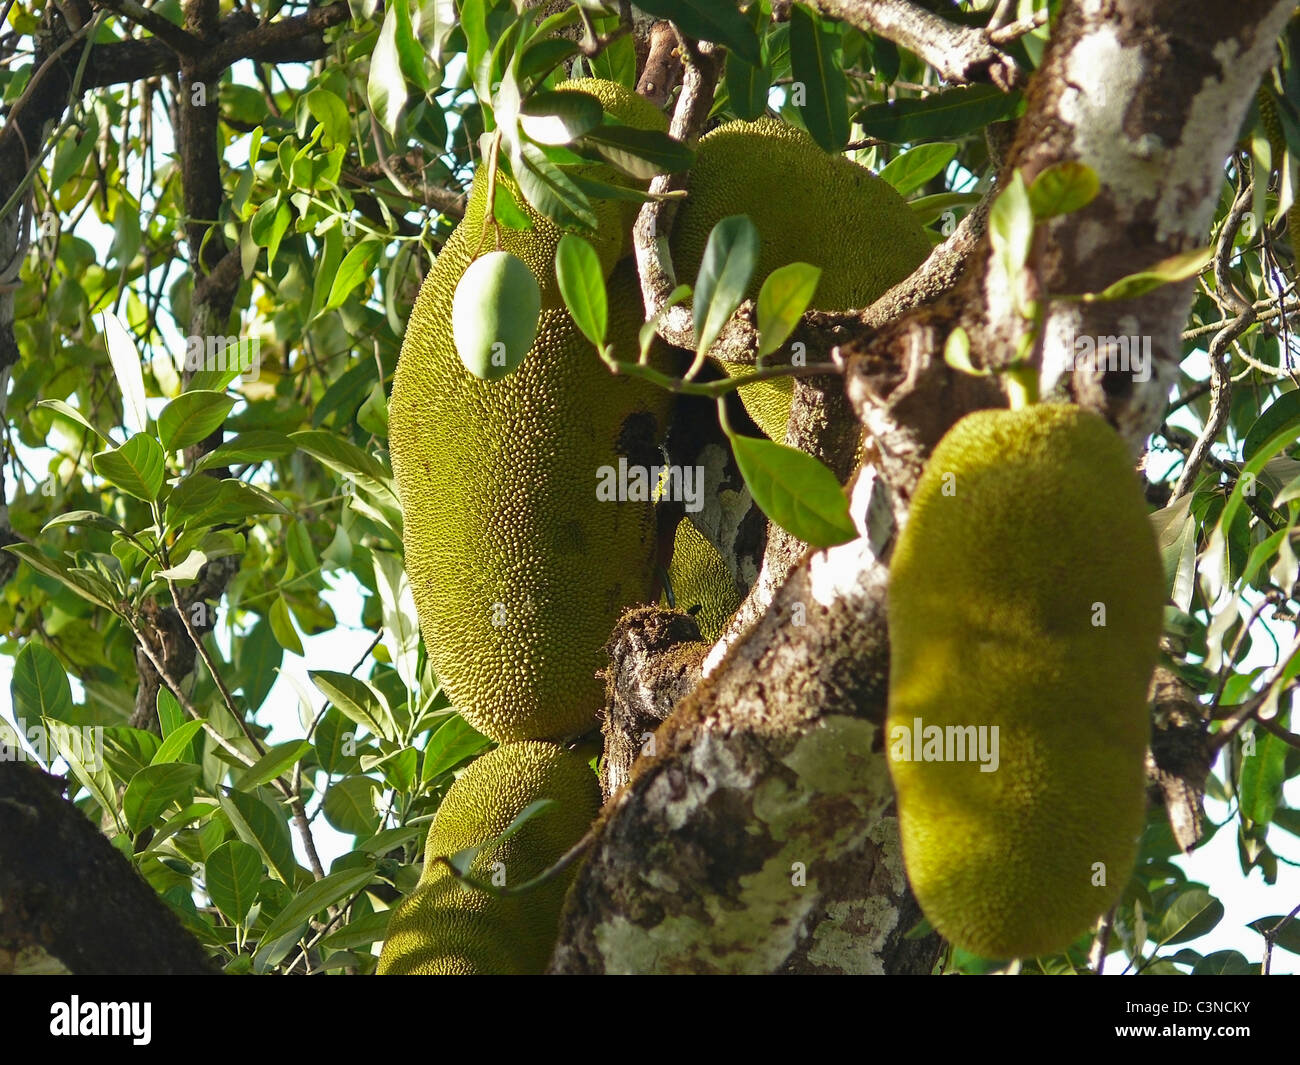 Jackfruit, Artocarpus heterophyllus Lam Moraceae, India Stock Photo